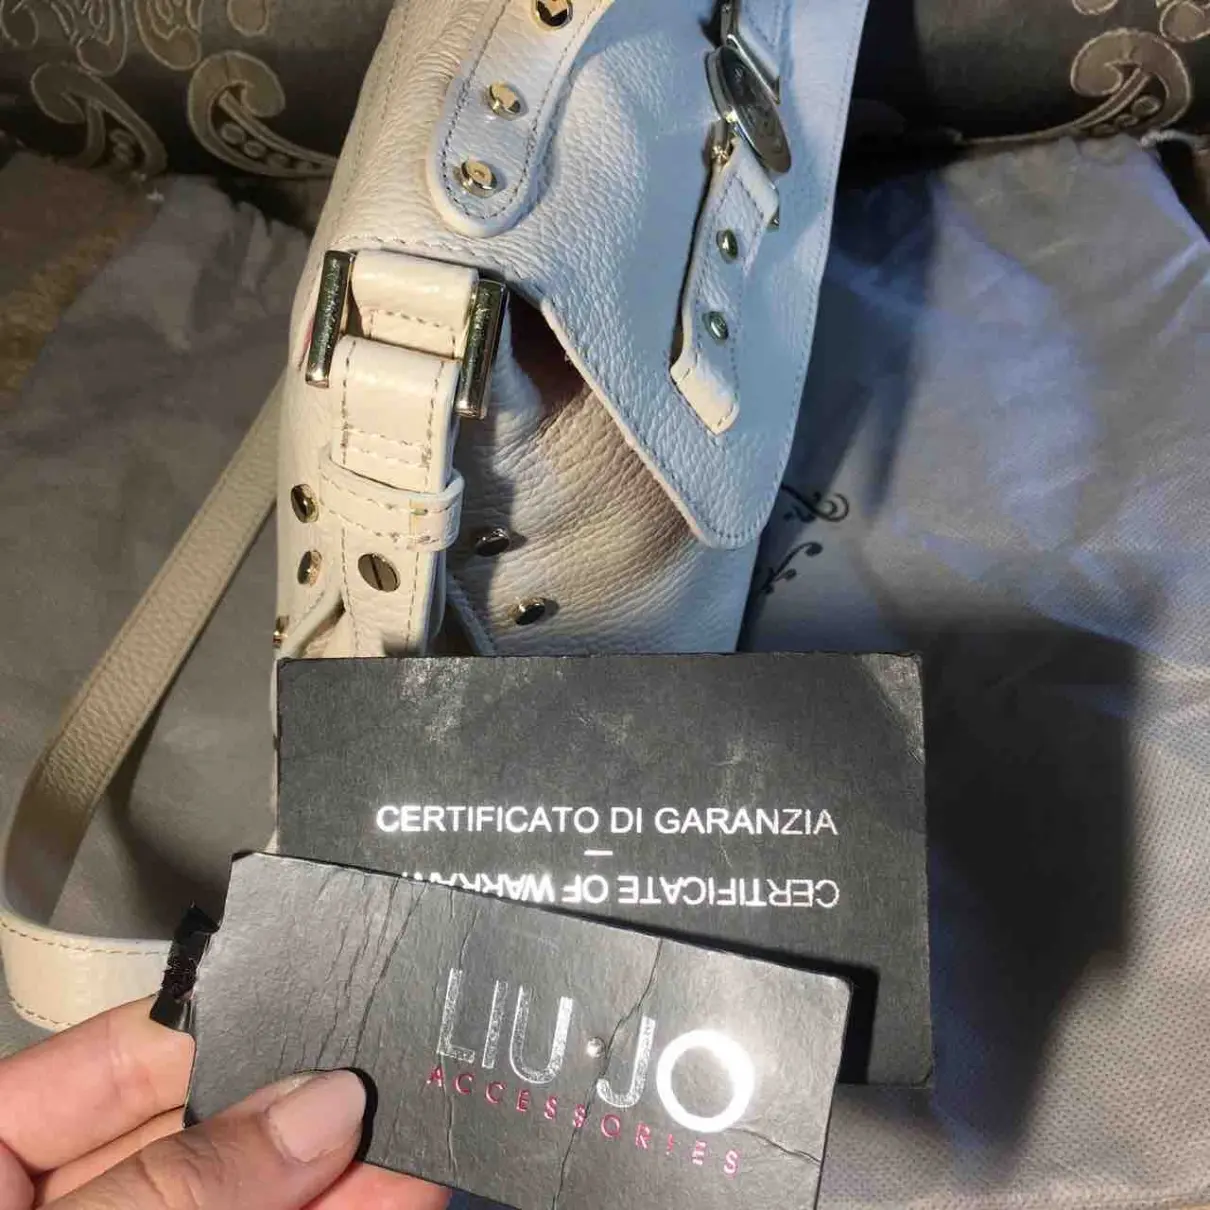 Buy Liu.Jo Leather crossbody bag online